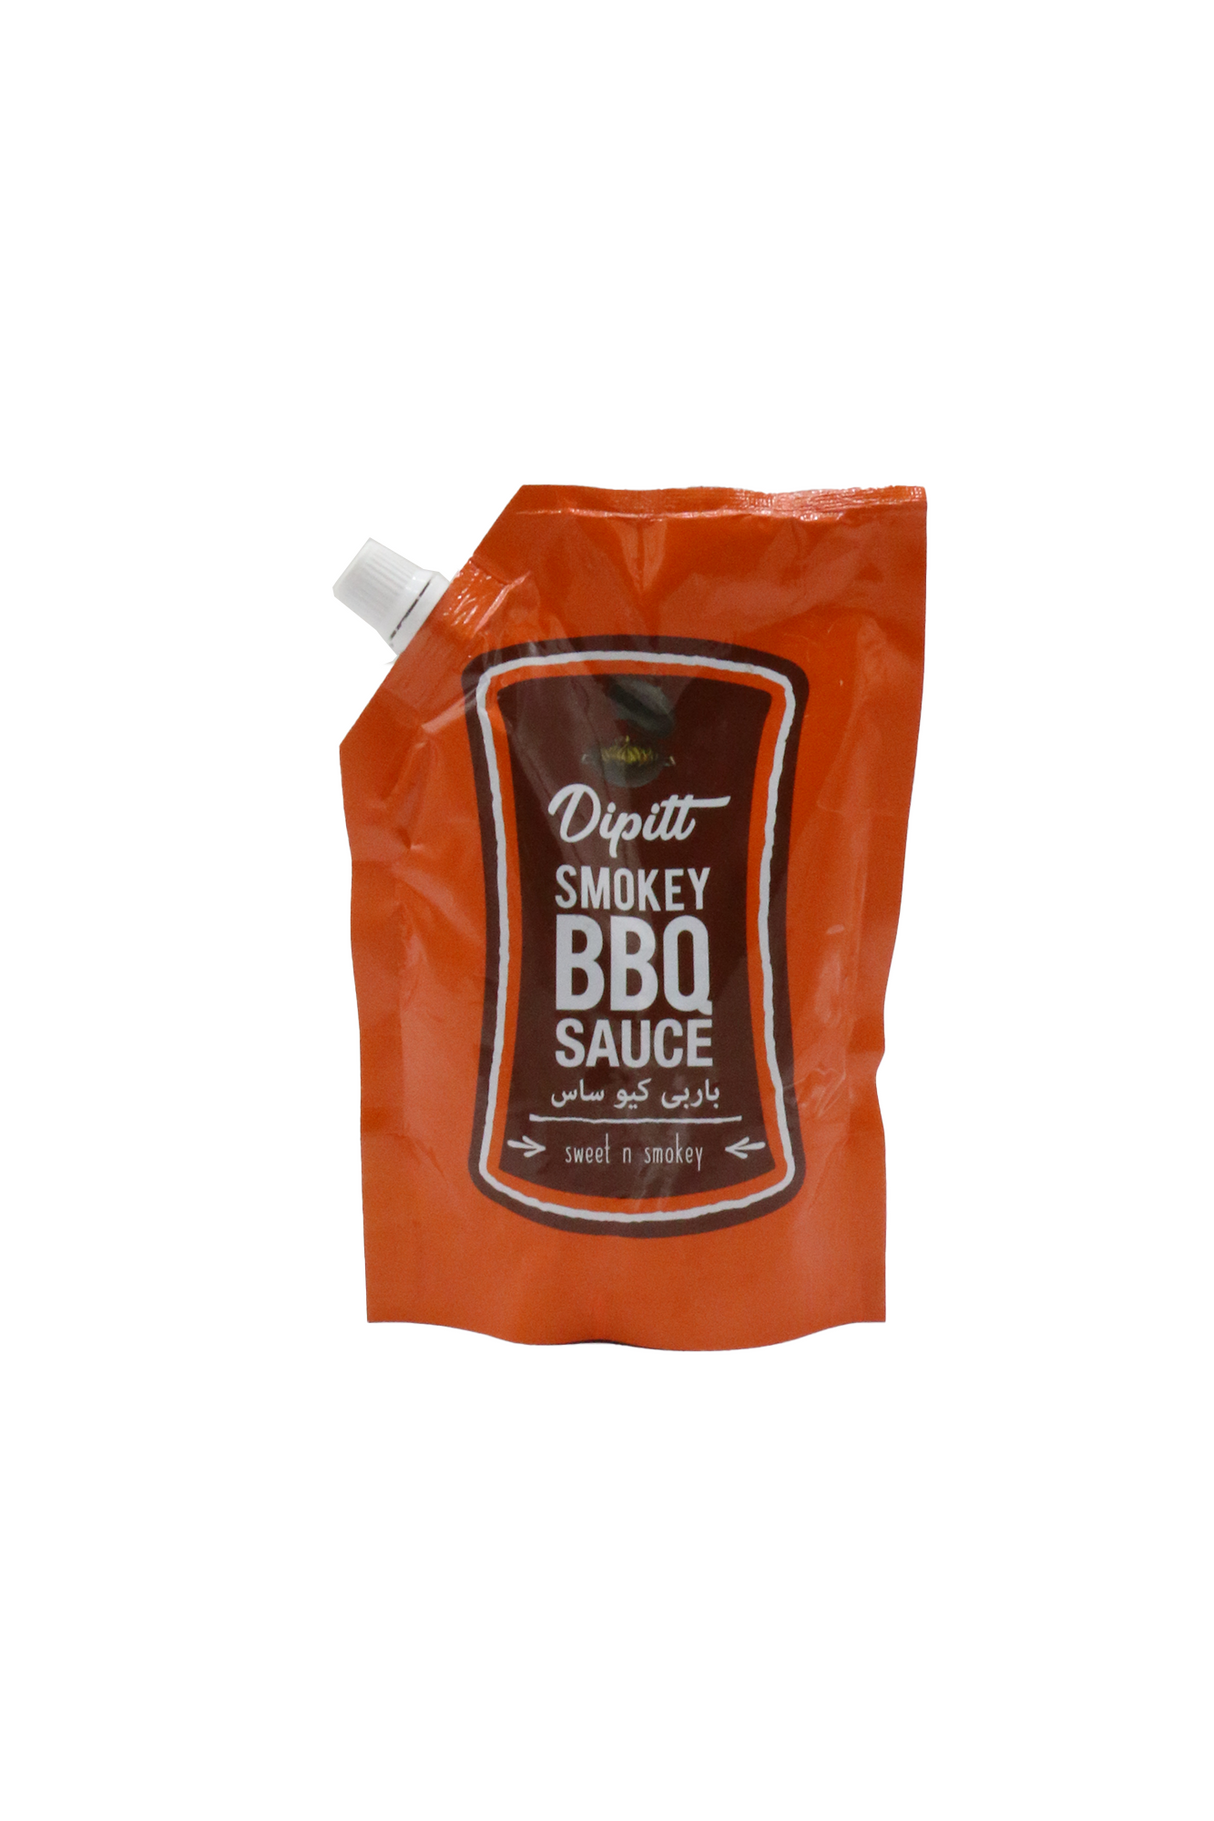 dipitt sauce smokey bbq 400g